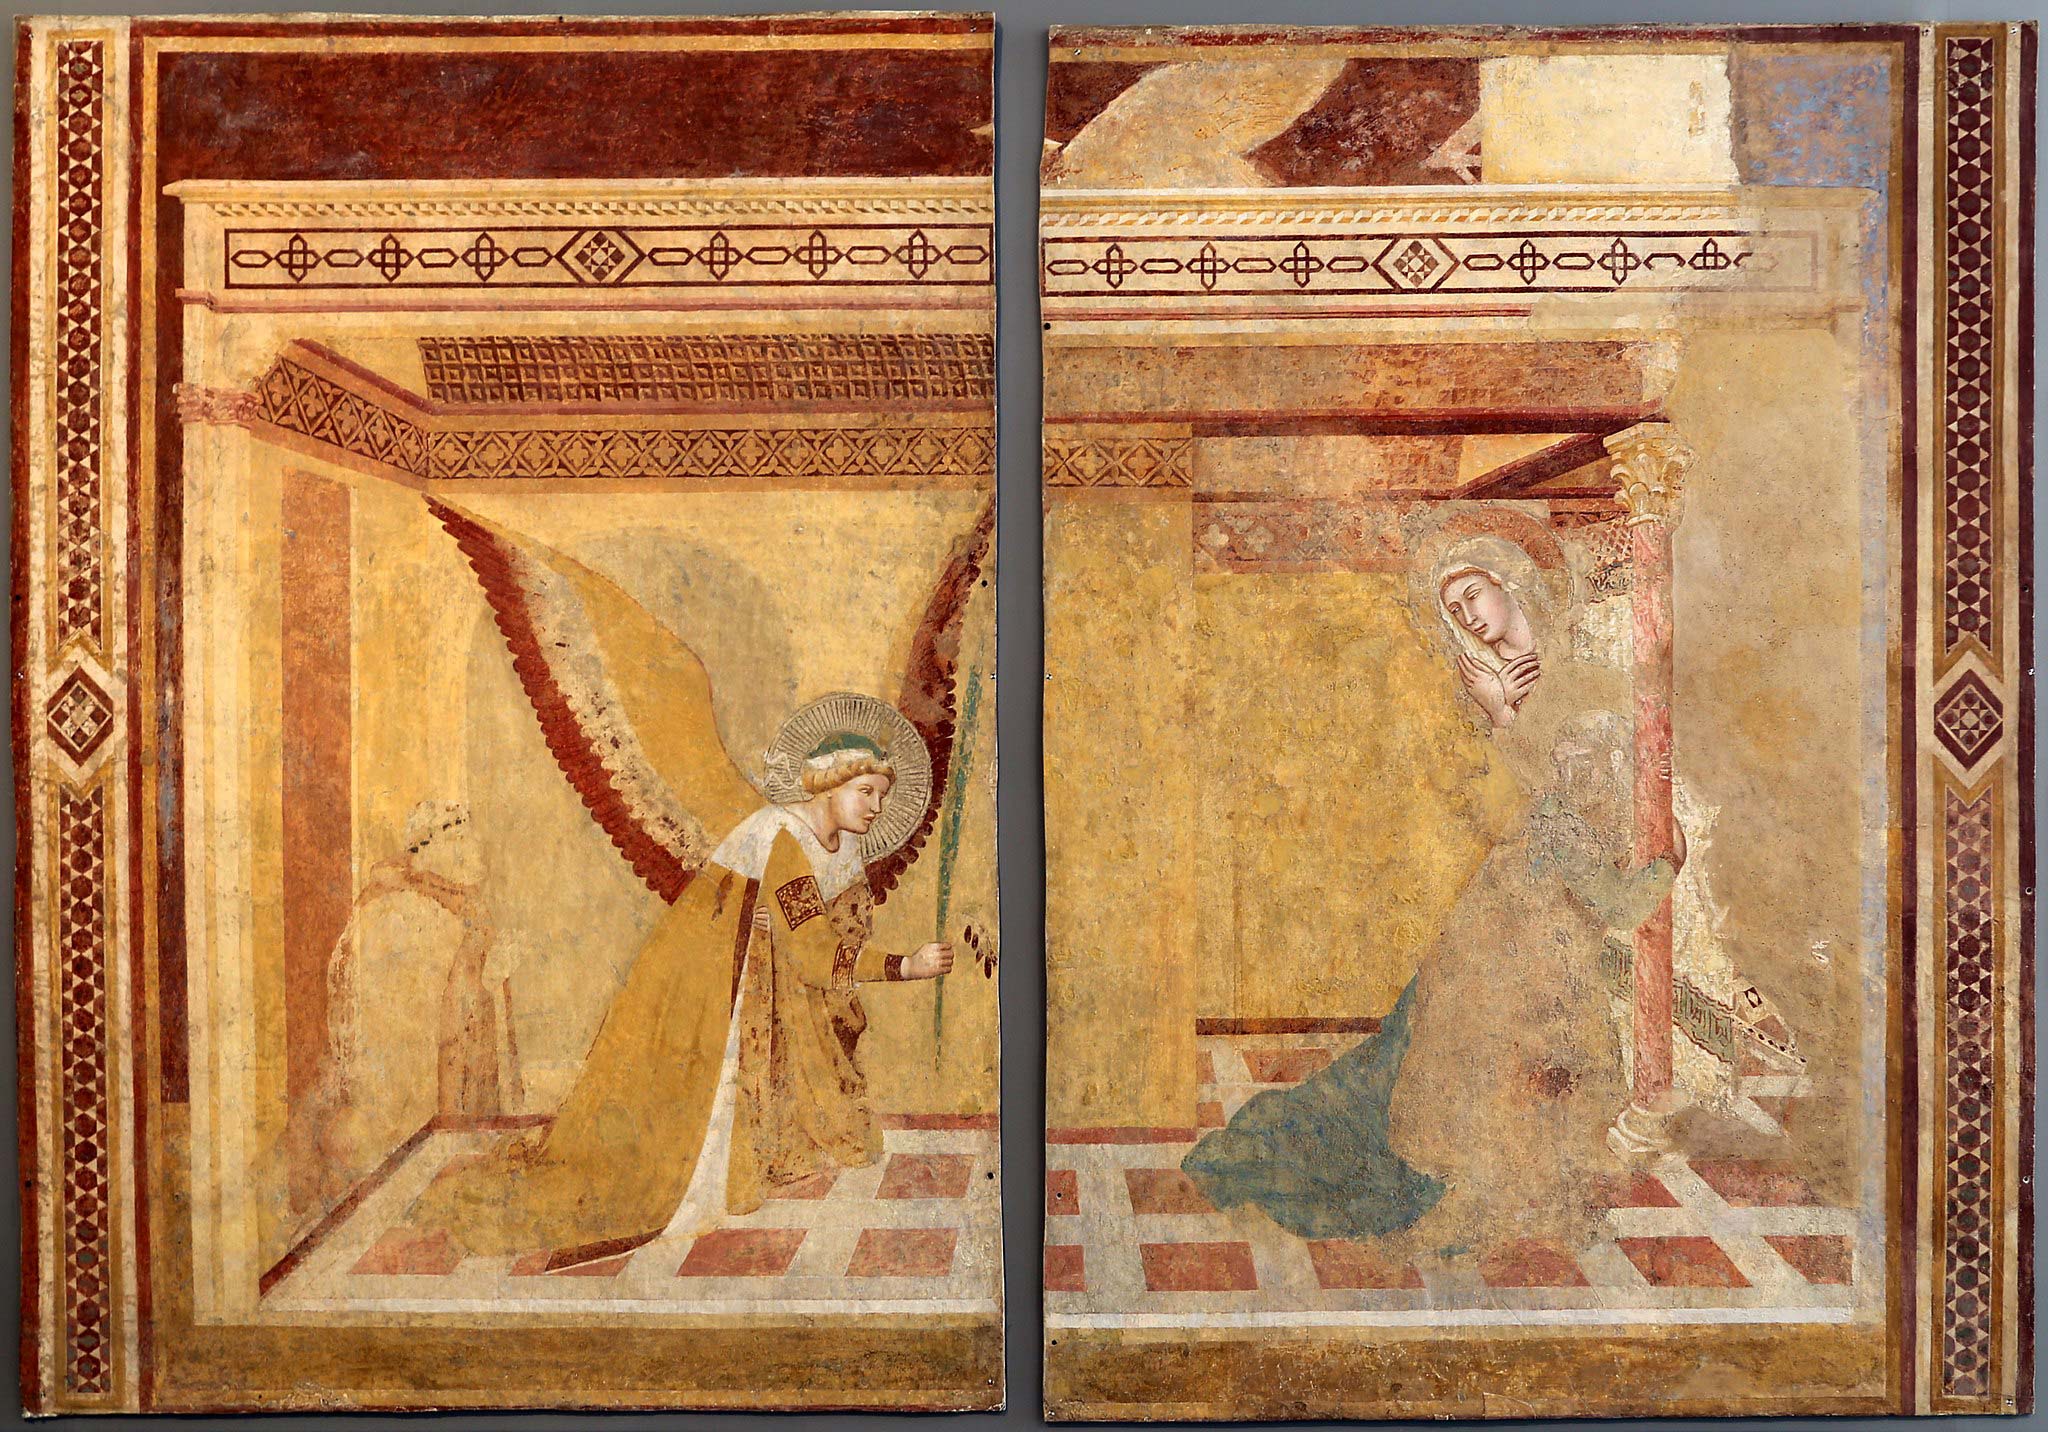 Ambrogio Lorenzetti, Annunciation (1334-1336; 238 x 441 cm; fresco, Chiusdino, church of San Galgano in Montesiepi)